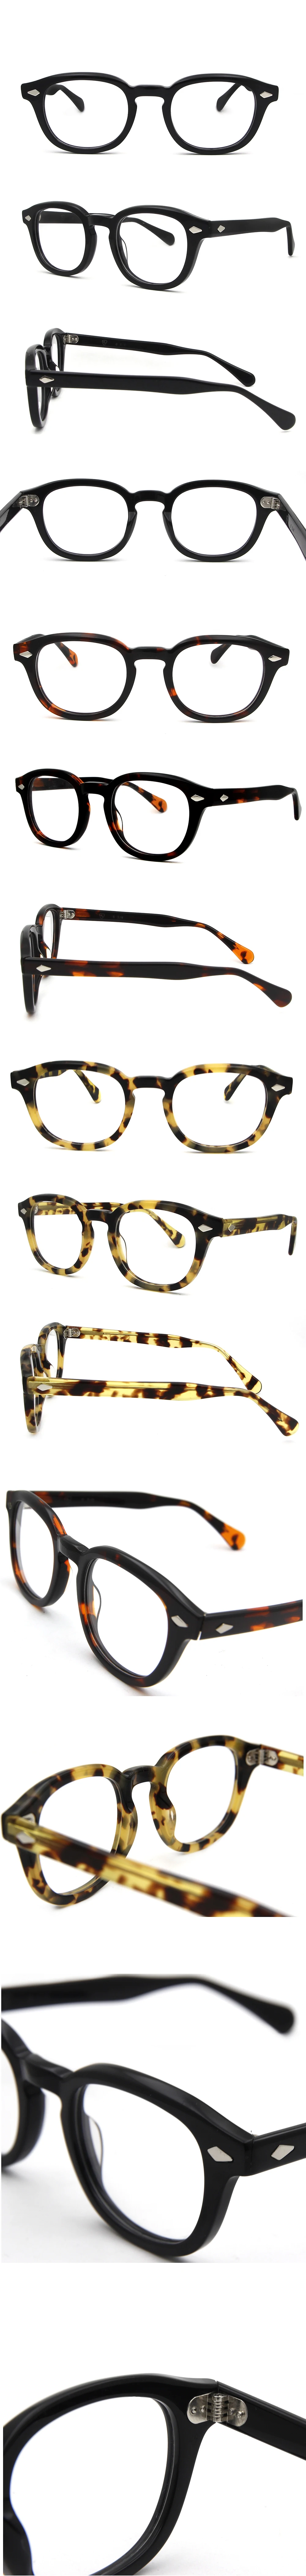 High Quality Eyeglass Men Retro Vintage Round Acetate Optical Frame For